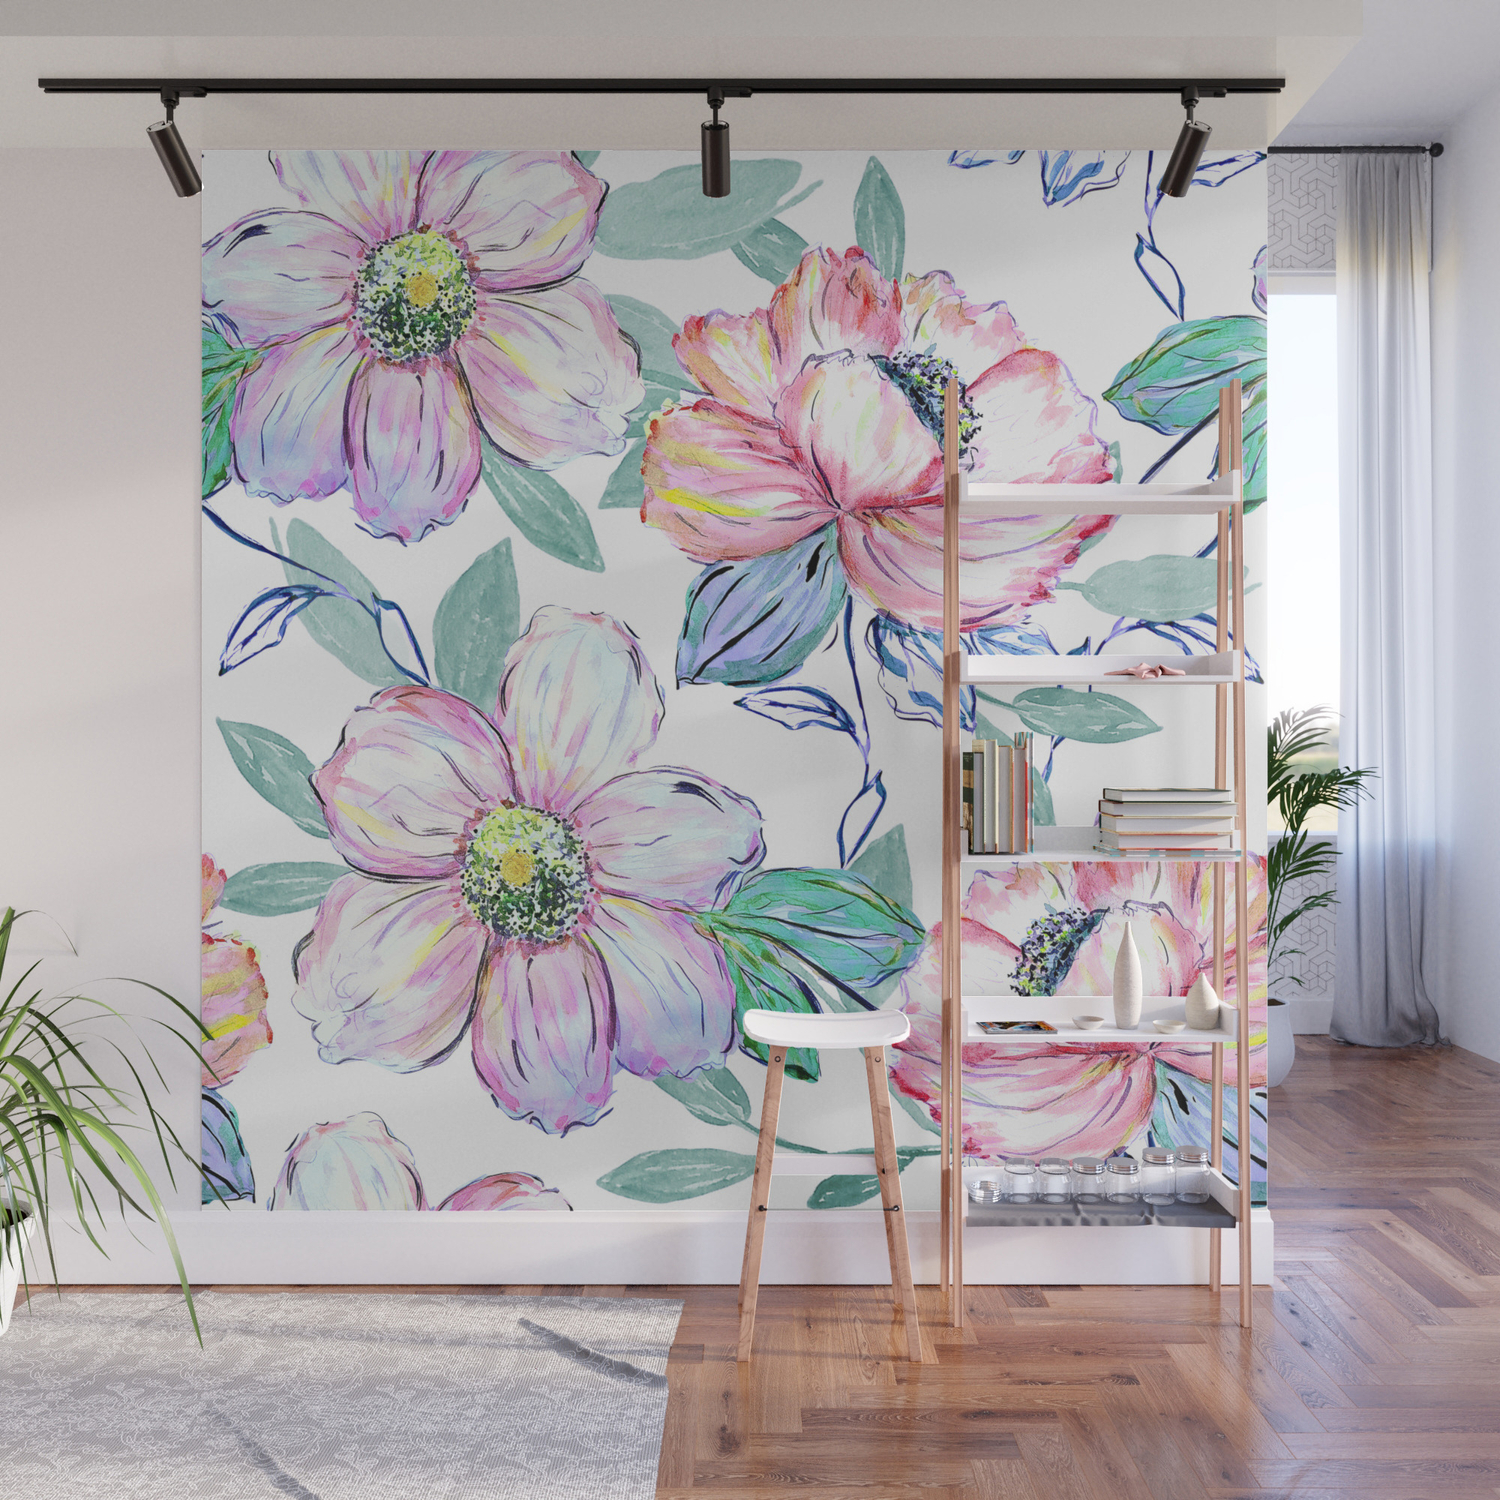 Romantic watercolor flowers hand paint design Wall Mural